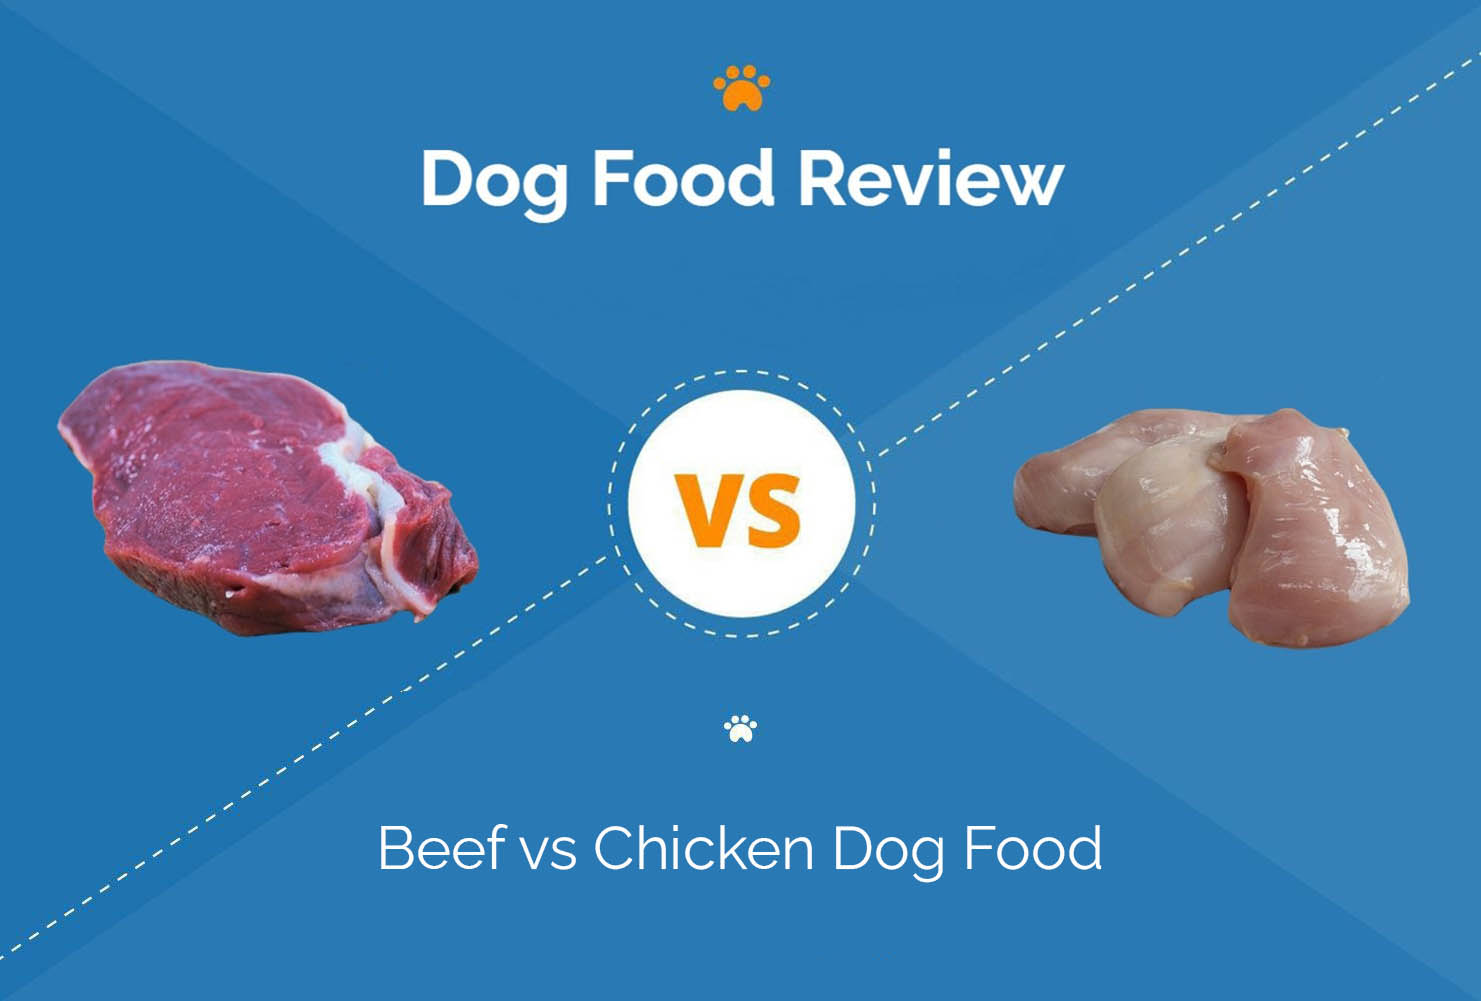 Beef vs Chicken Dog Food